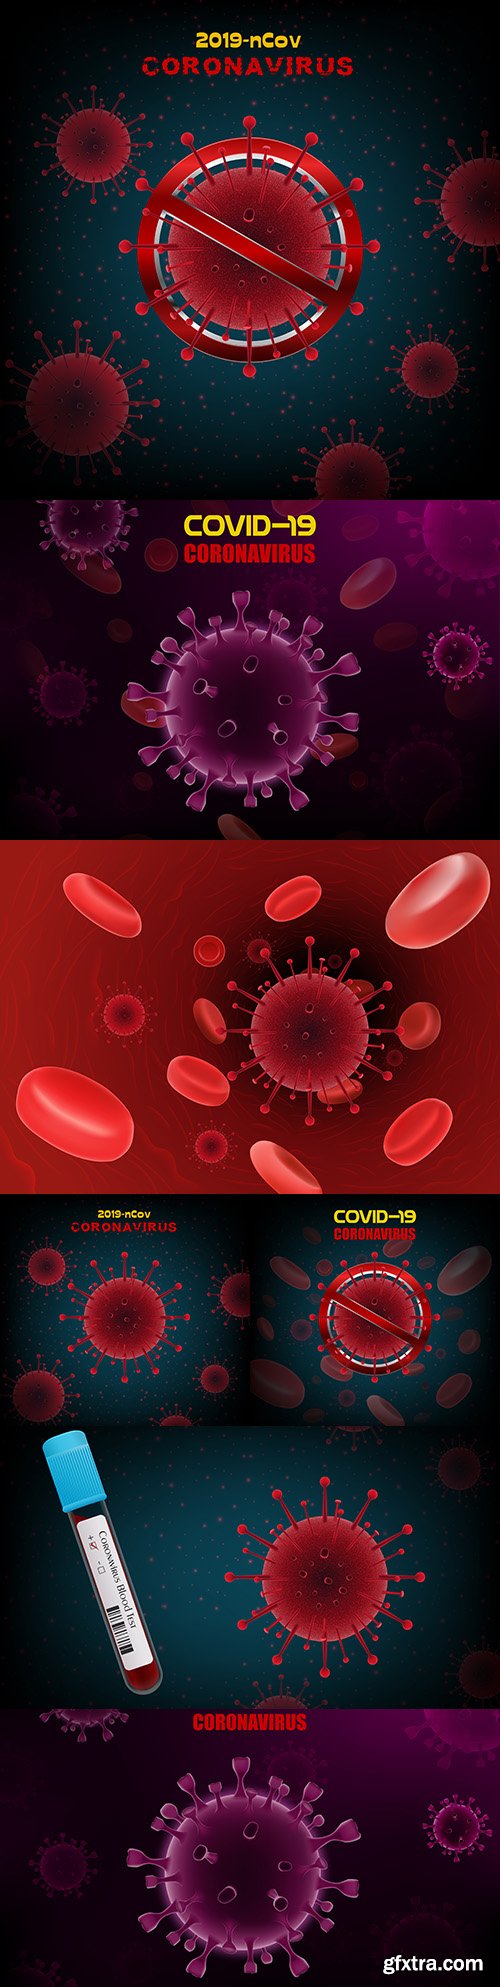 Illustrations concept coronavirus disease covid-19
